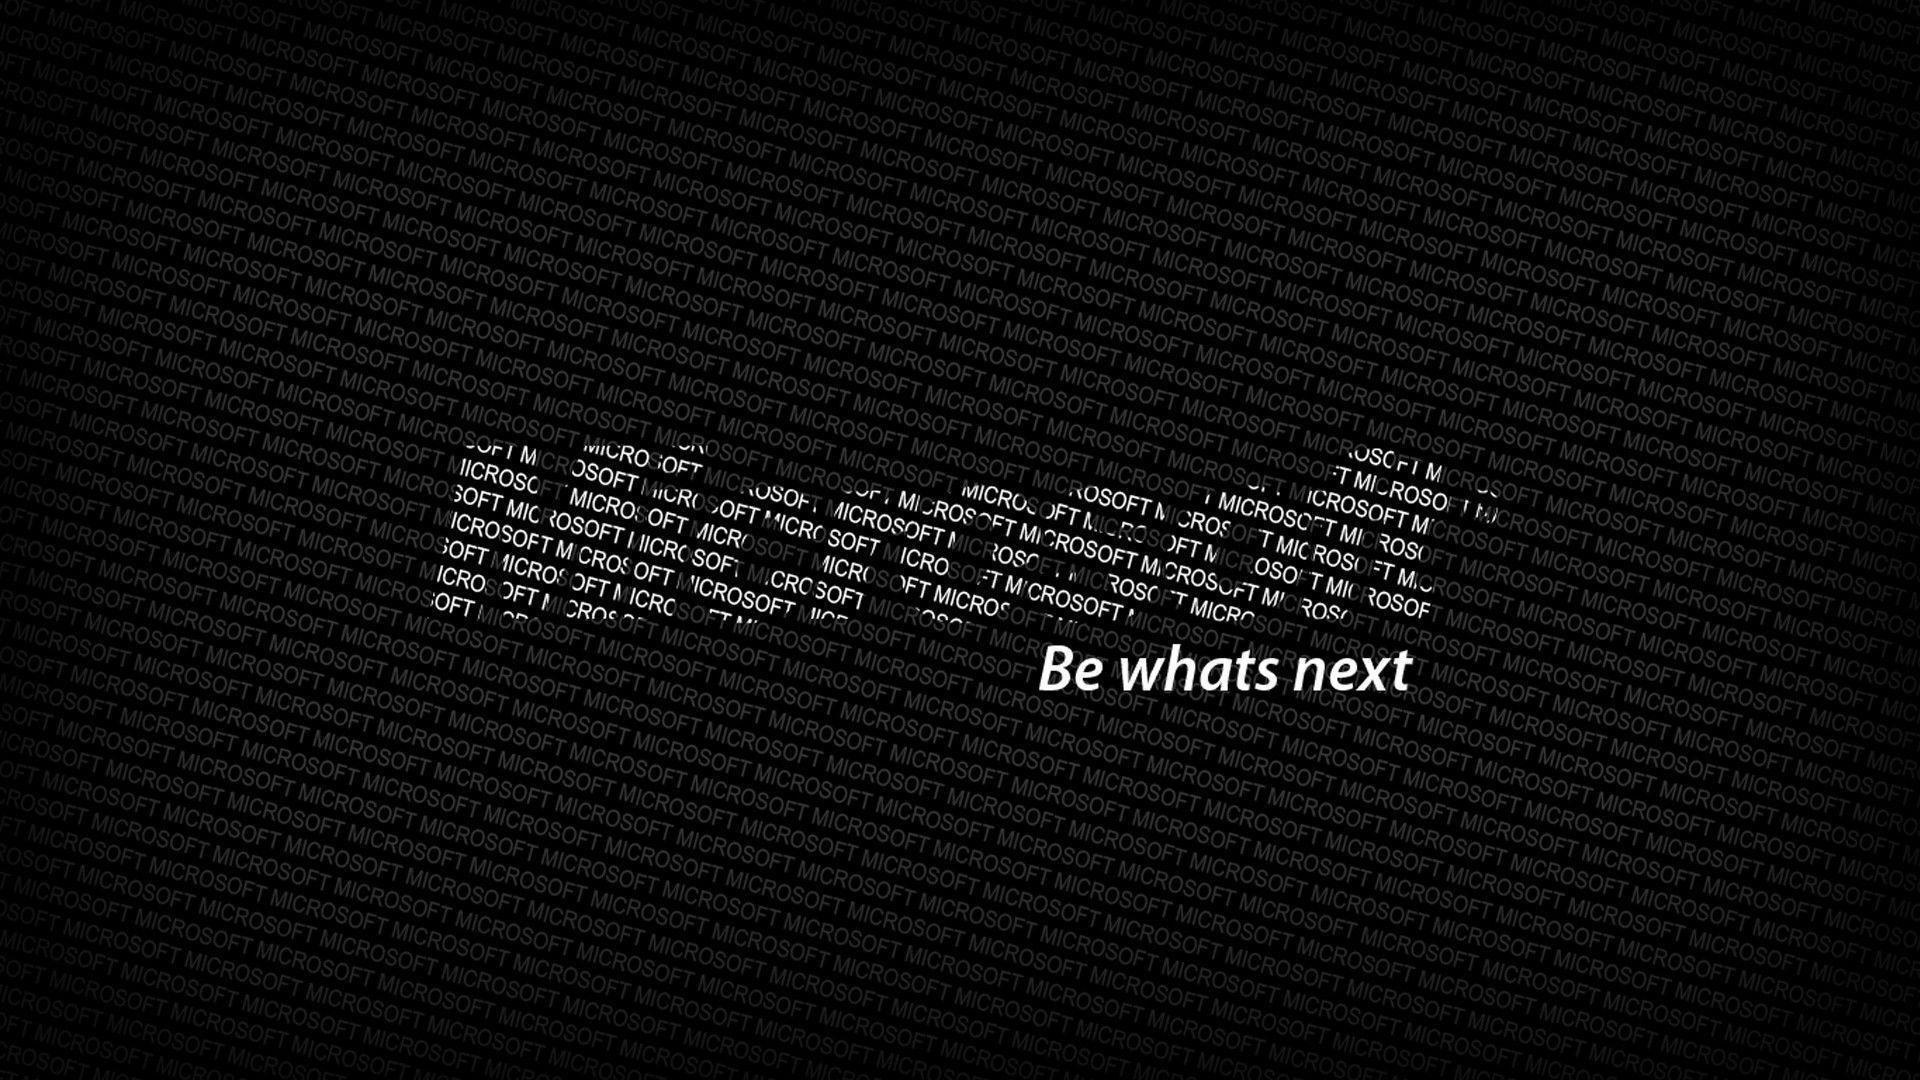 Download Microsoft Wallpaper 18436 1920x1080 px High Resolution